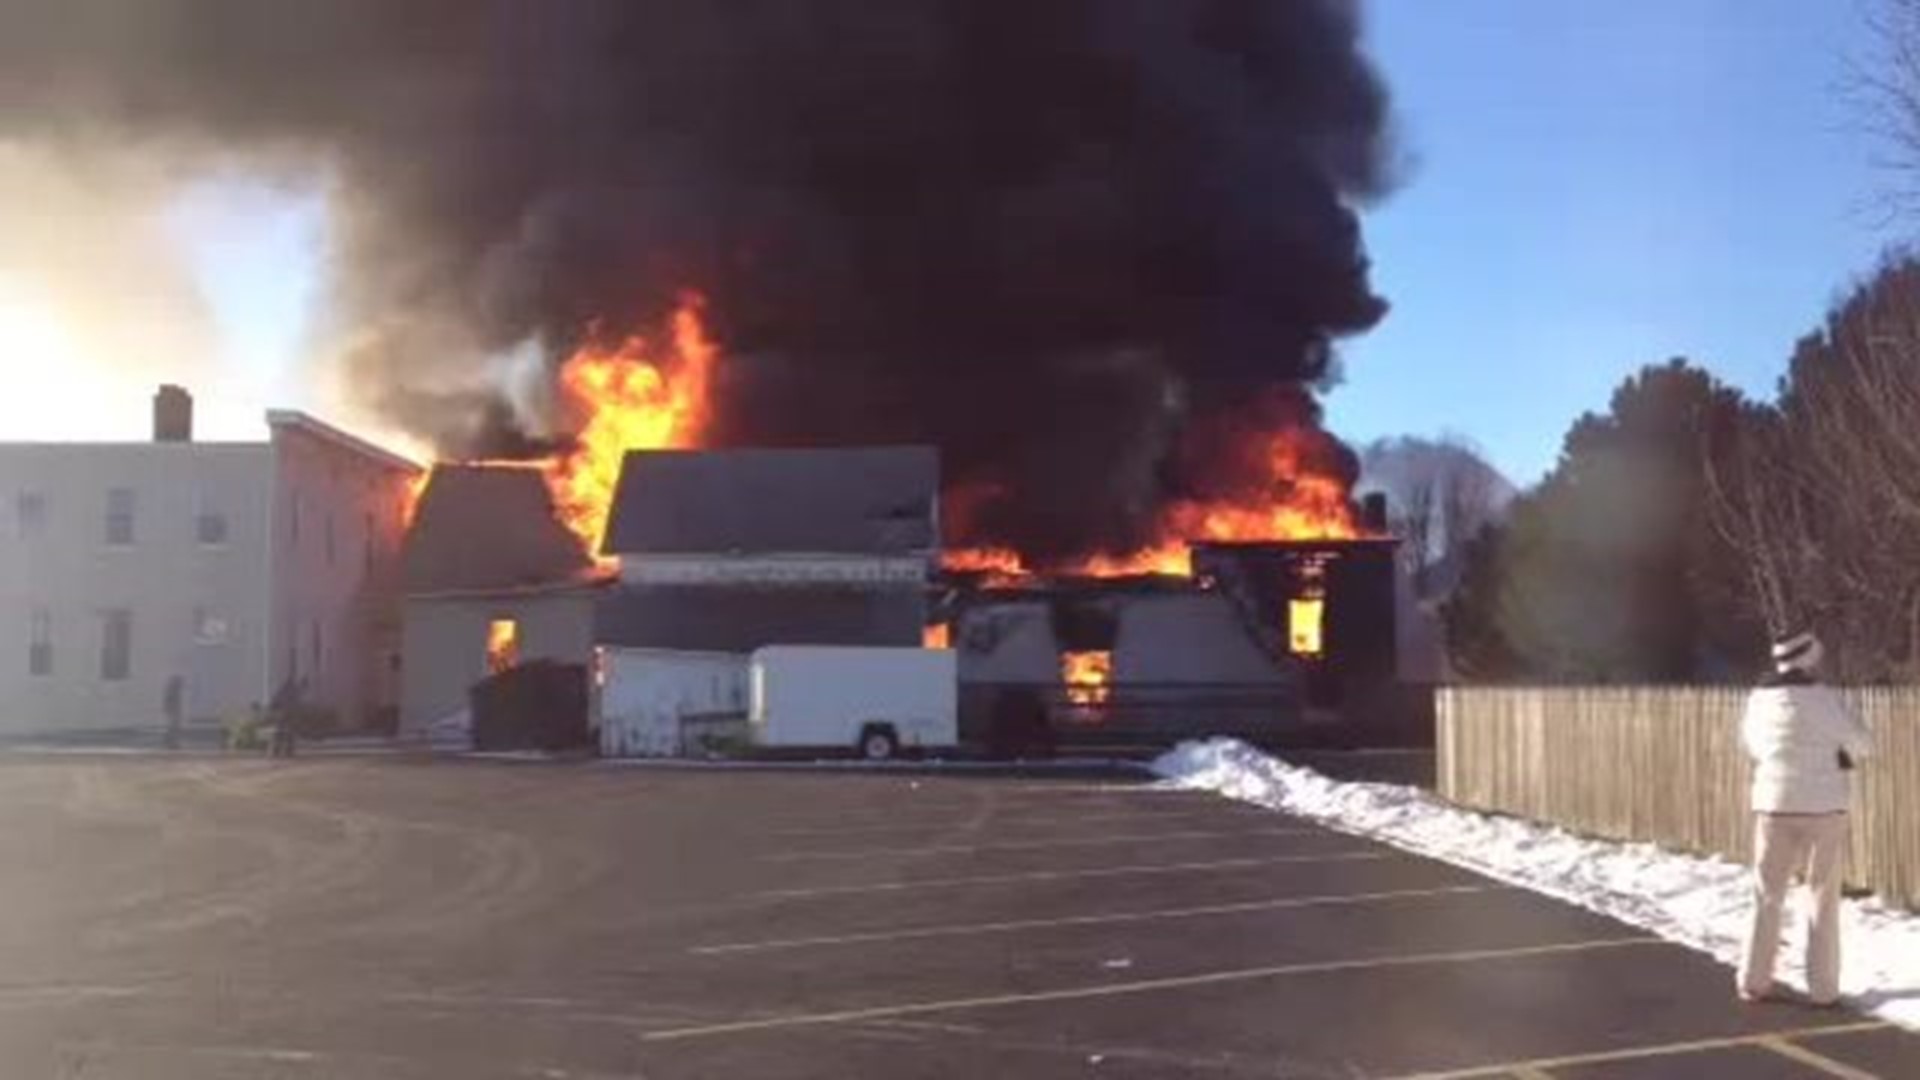 Video of Eldridge fire 1-17-13 from Tisha Bousselot